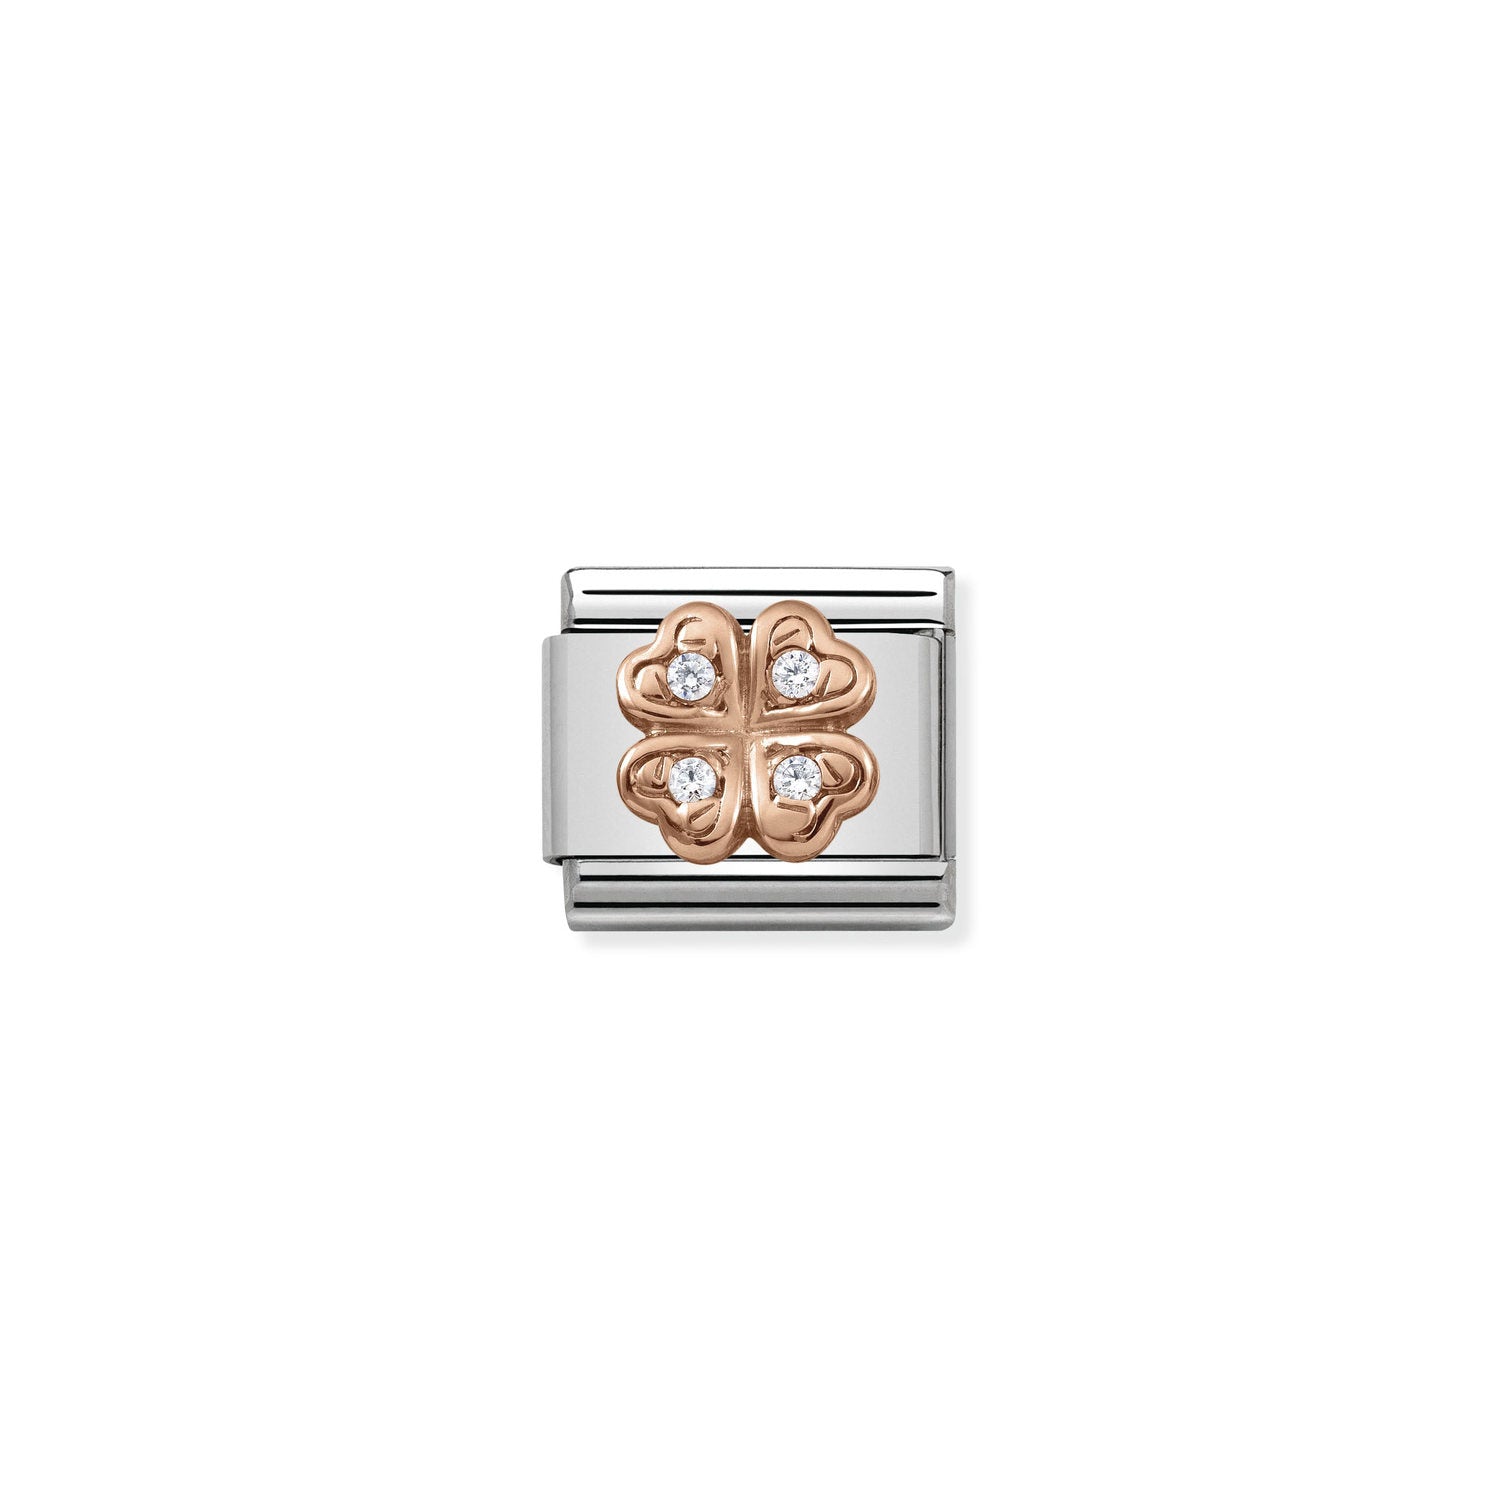 NOMINATION - Composable Classic SYMBOL  s/st, CZ, 9ct rose gold (Four Leaf Clover)